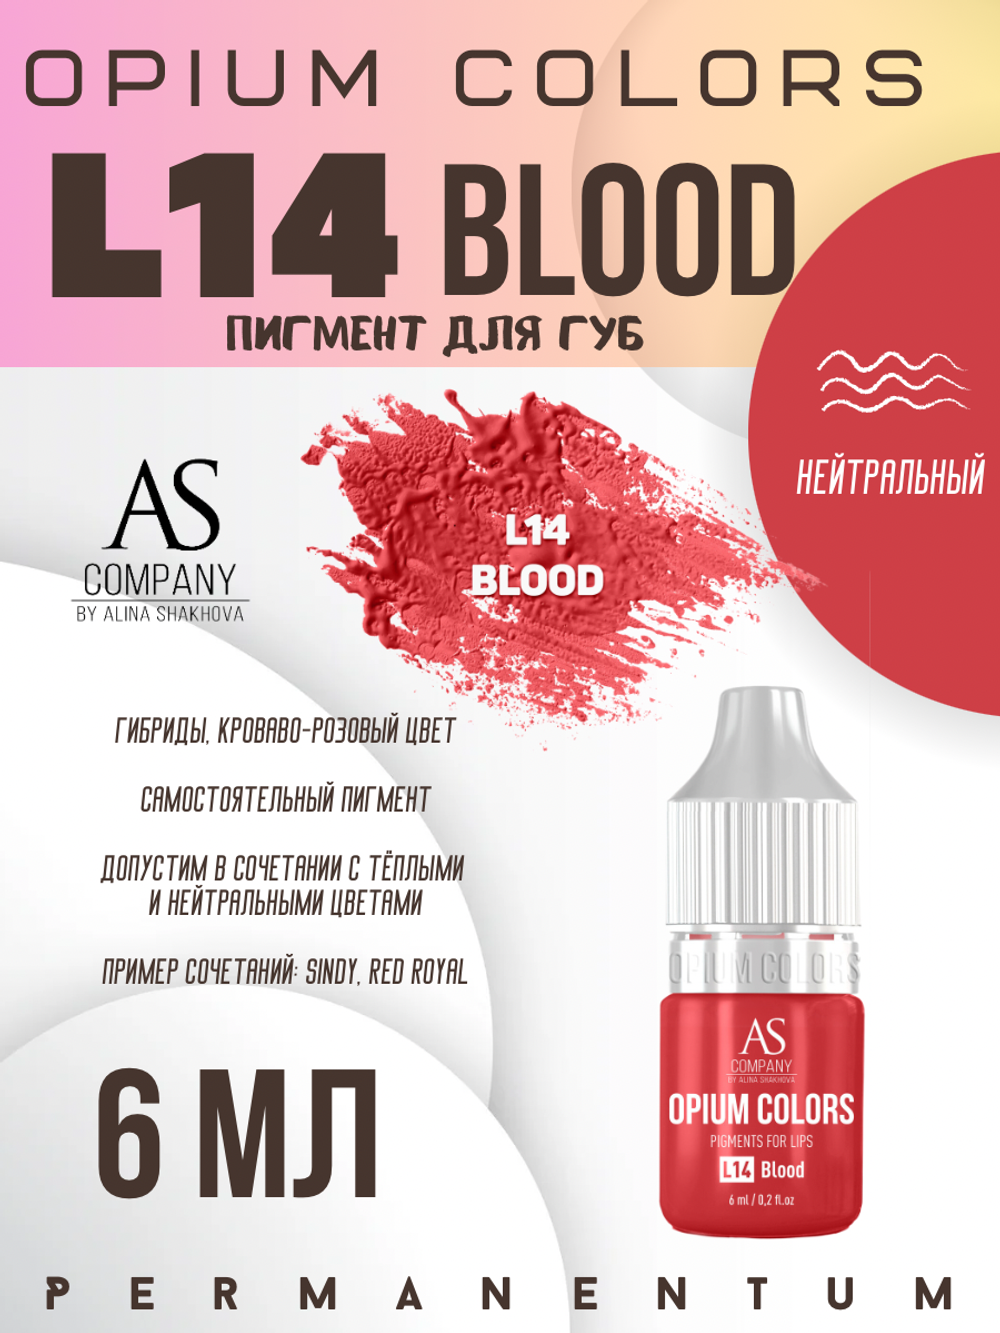 L14 BLOOD пигмент для губ TM AS-Company OPIUM COLORS